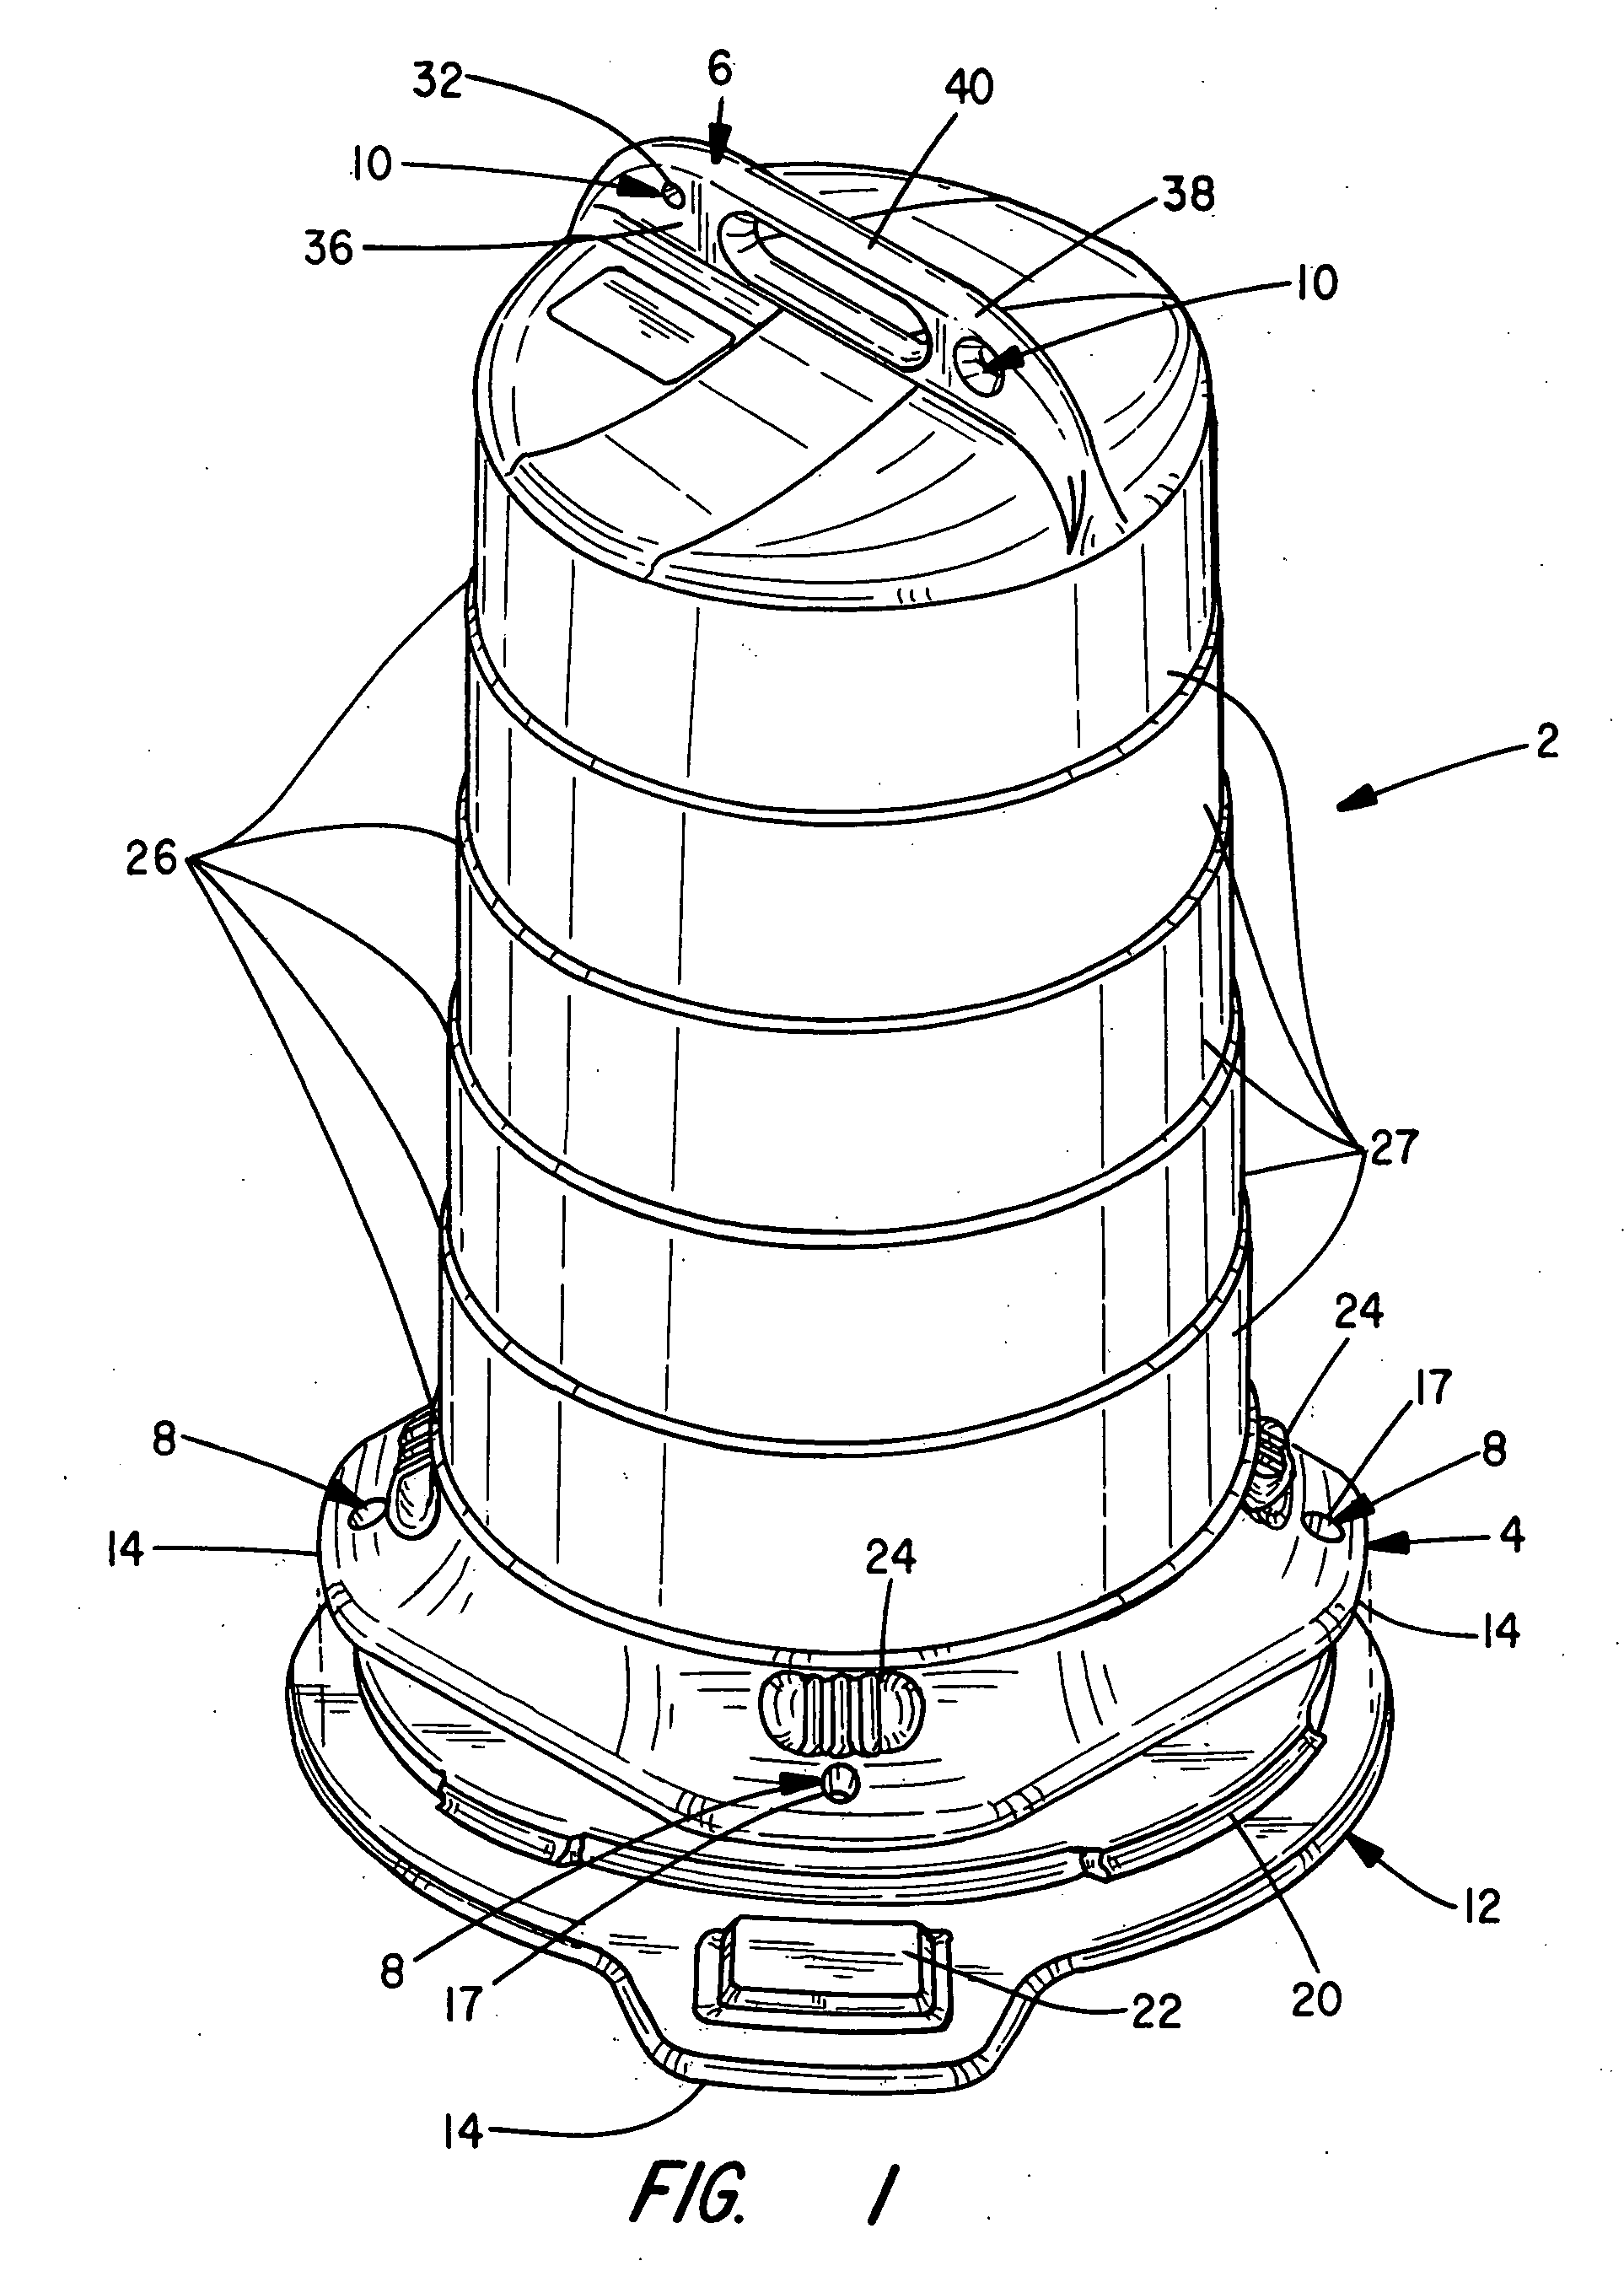 Traffic declineator barrel